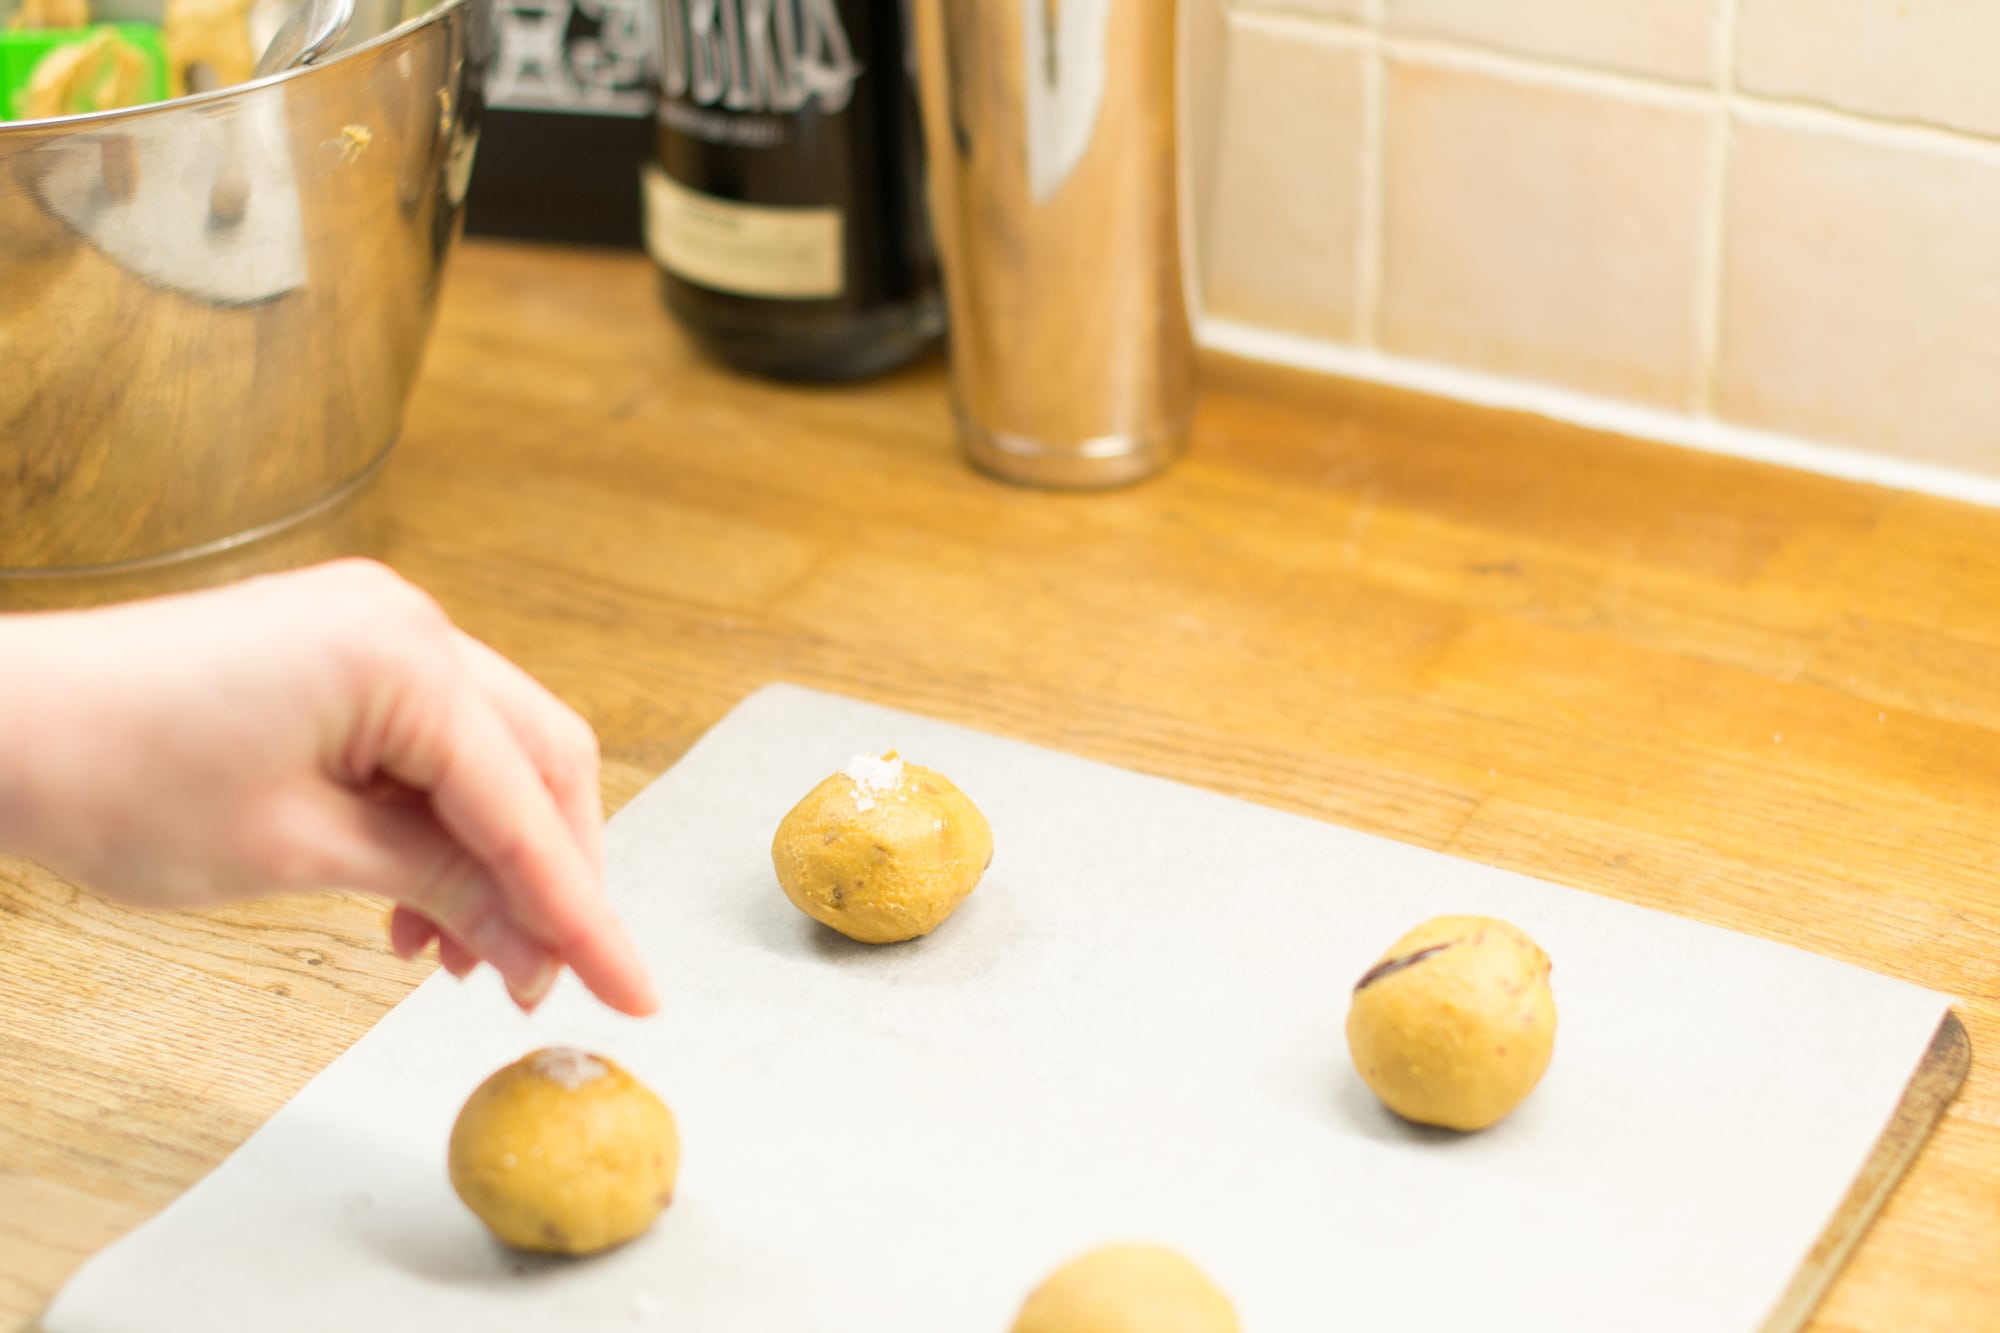 Placing dough balls on the baking tray